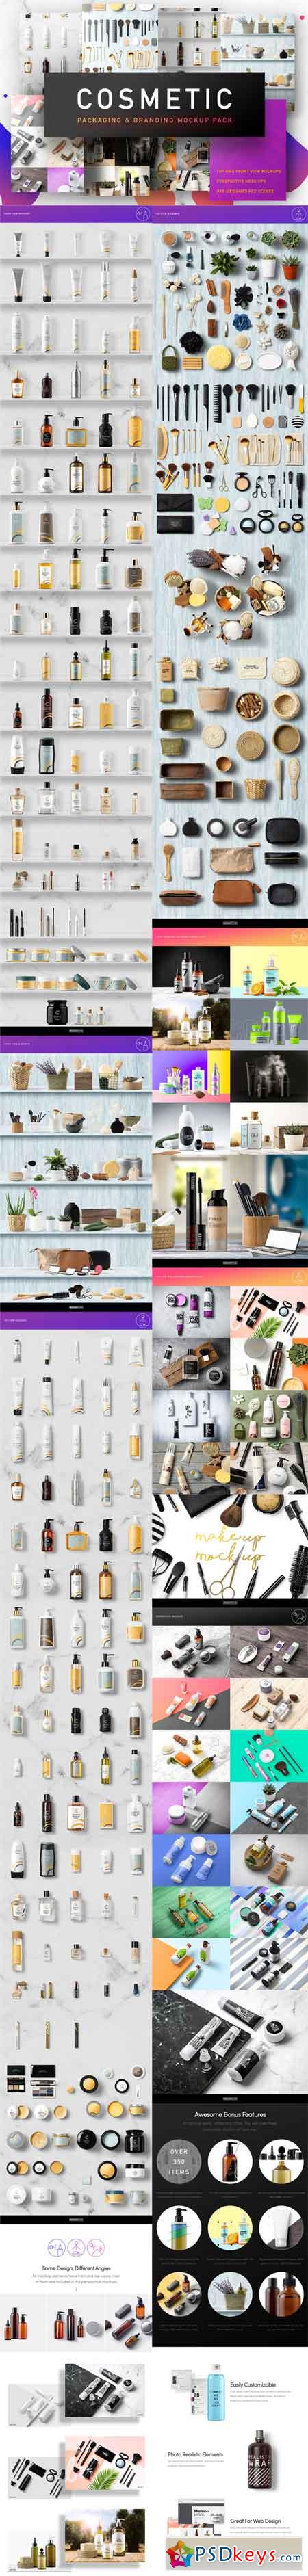 Download Cosmetic Packaging Branding MockUp 701256 » Free Download ...